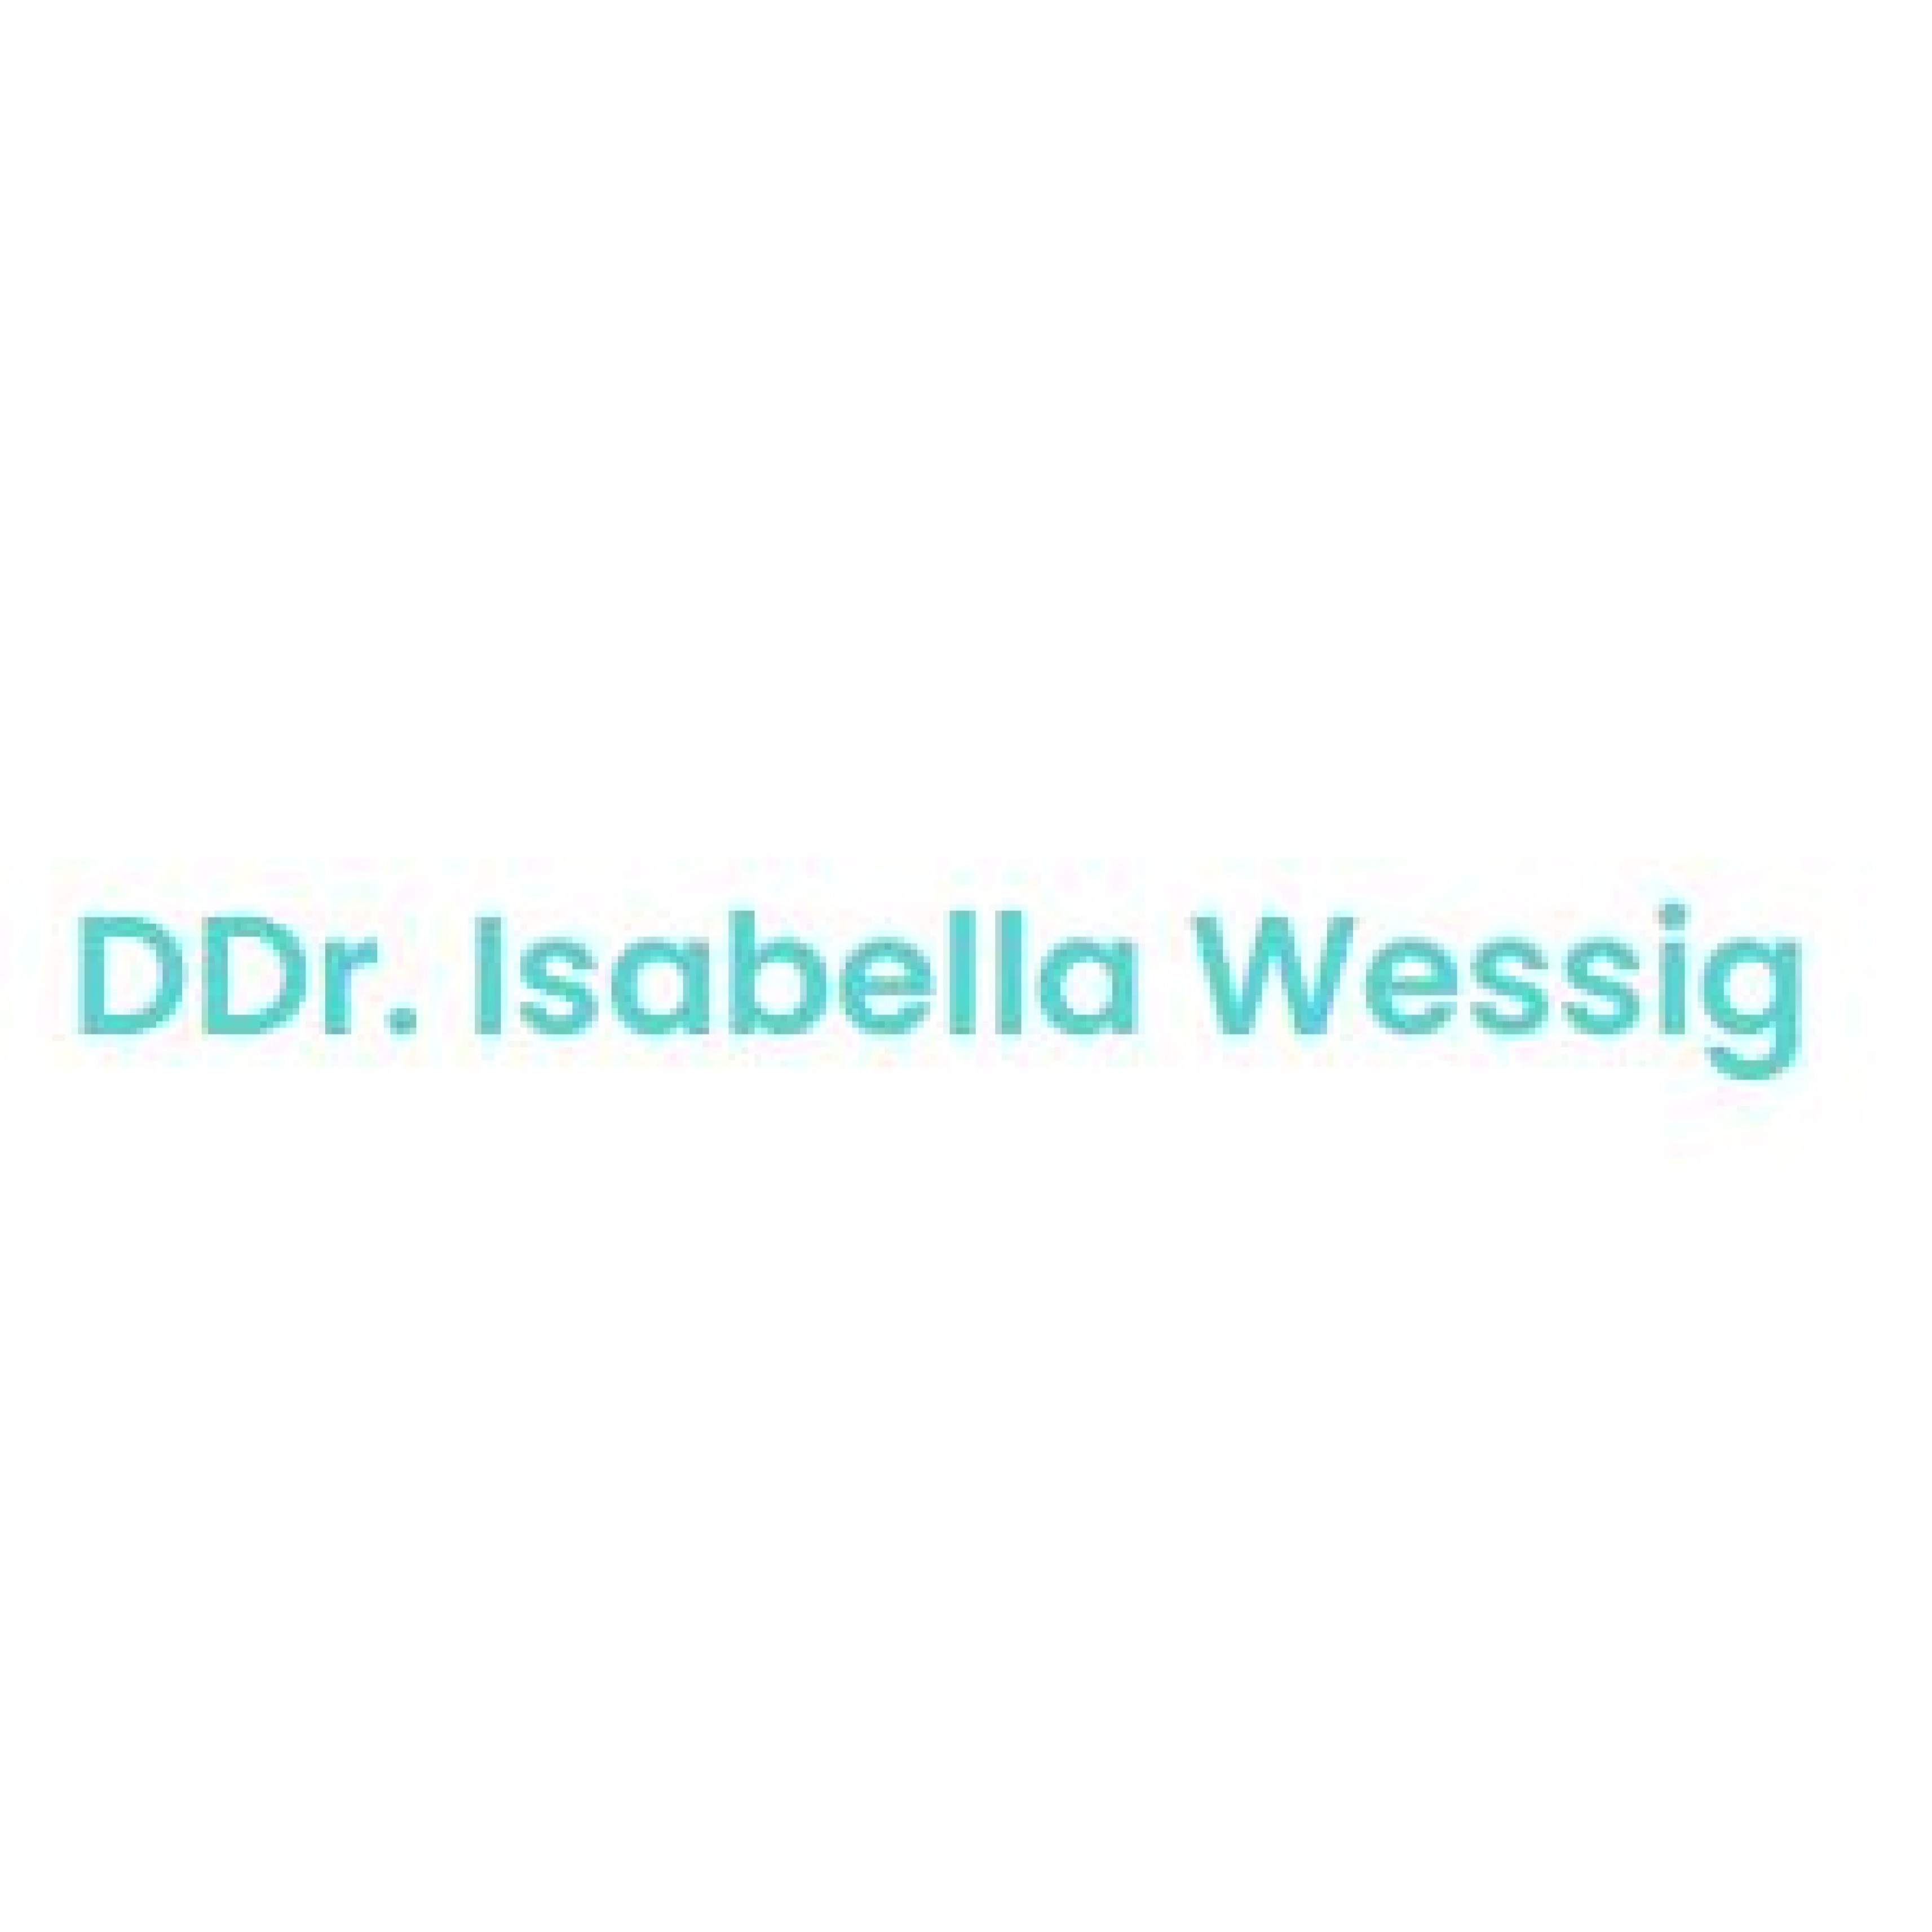 DDr. Isabella Wessig